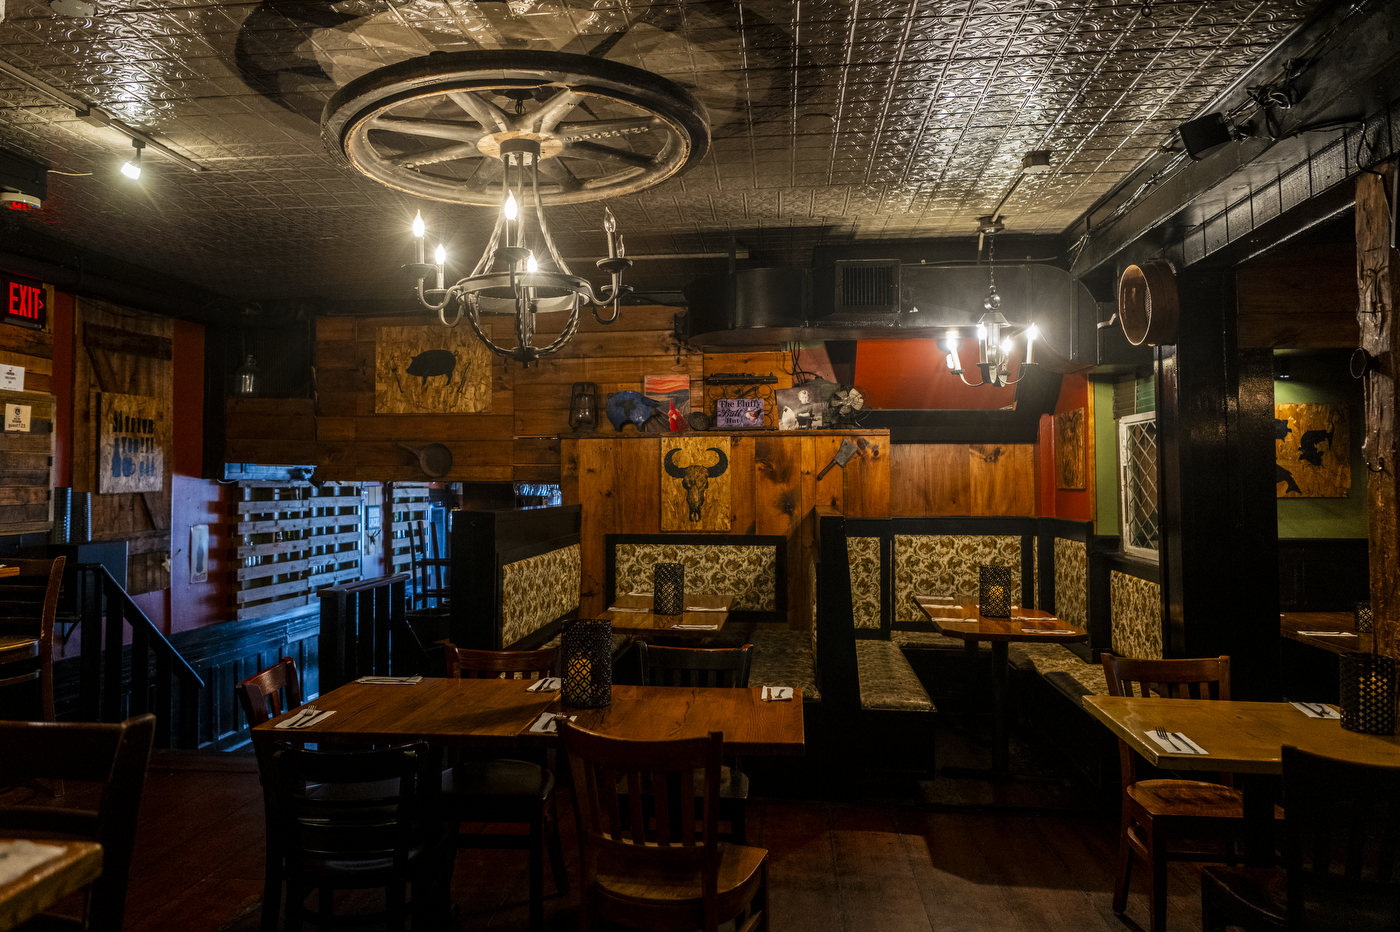 western themed interior of Scott Kirmil's restaurant